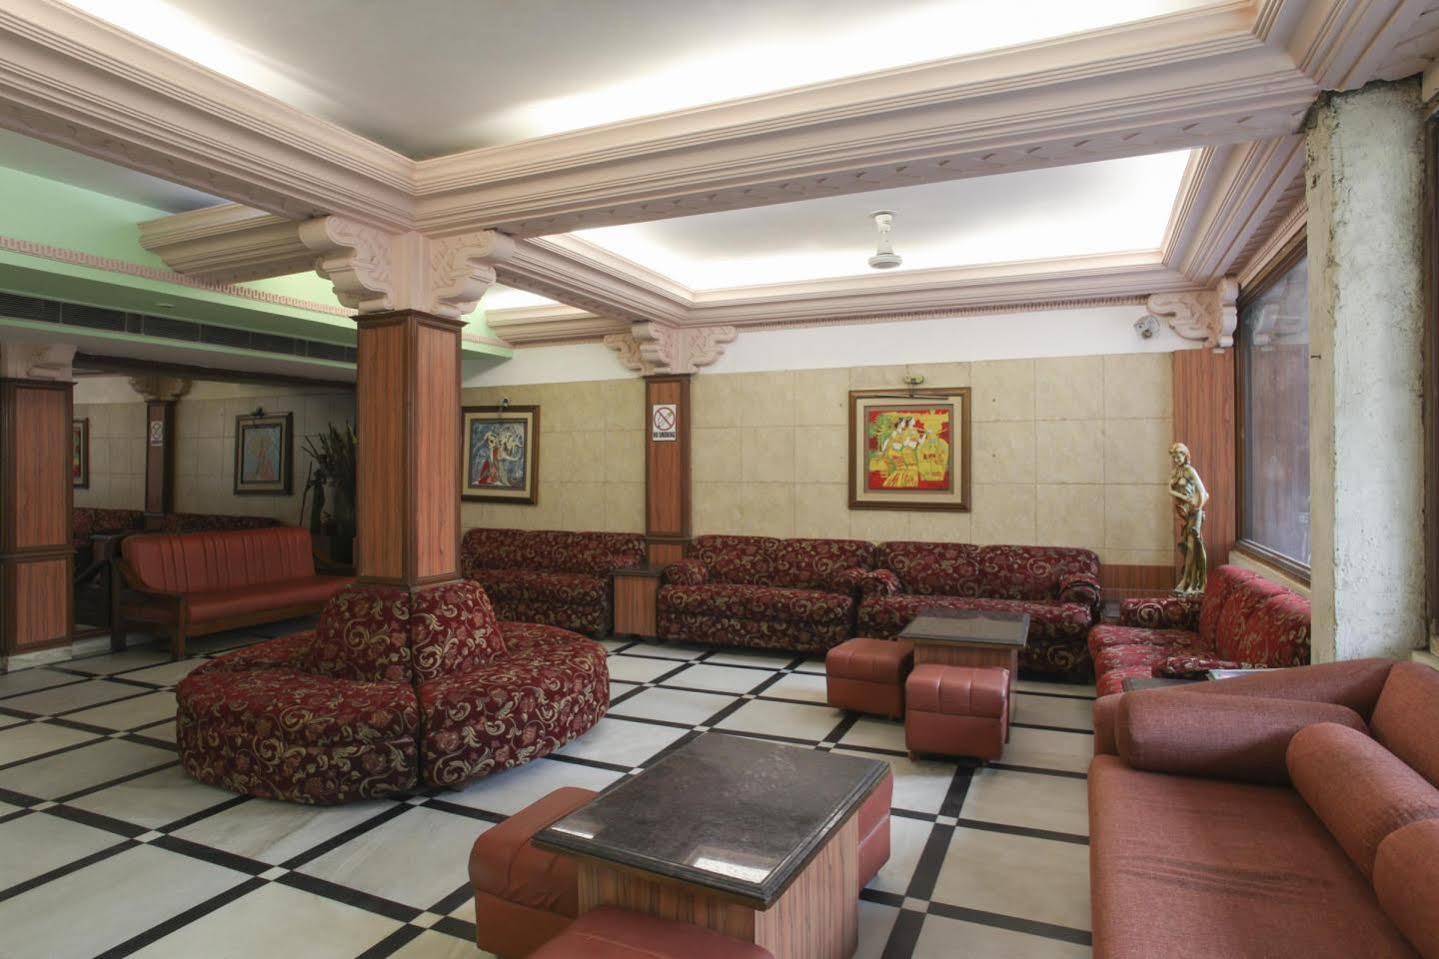 Amar Yatri Niwas Hotel Agra  Exterior foto